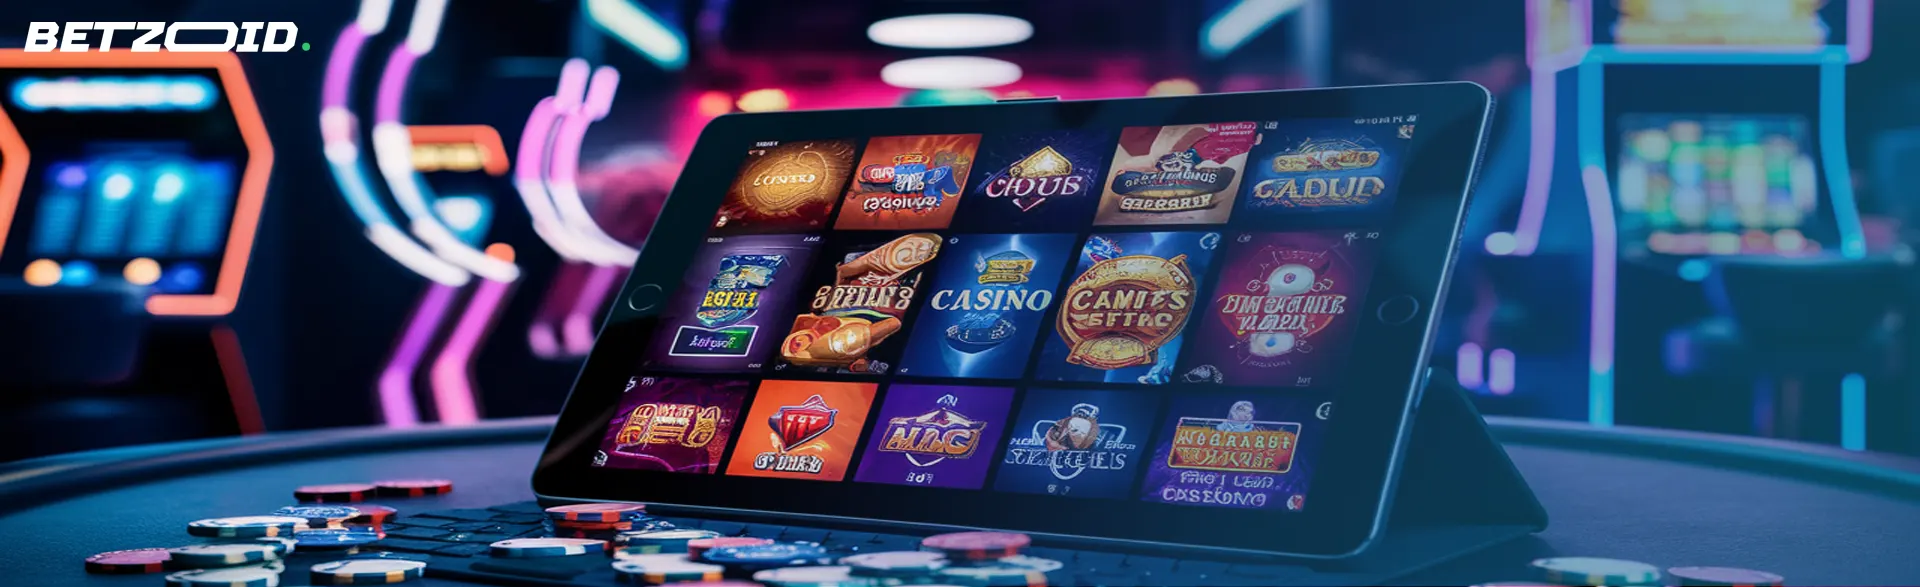 New online casinos in Australia.